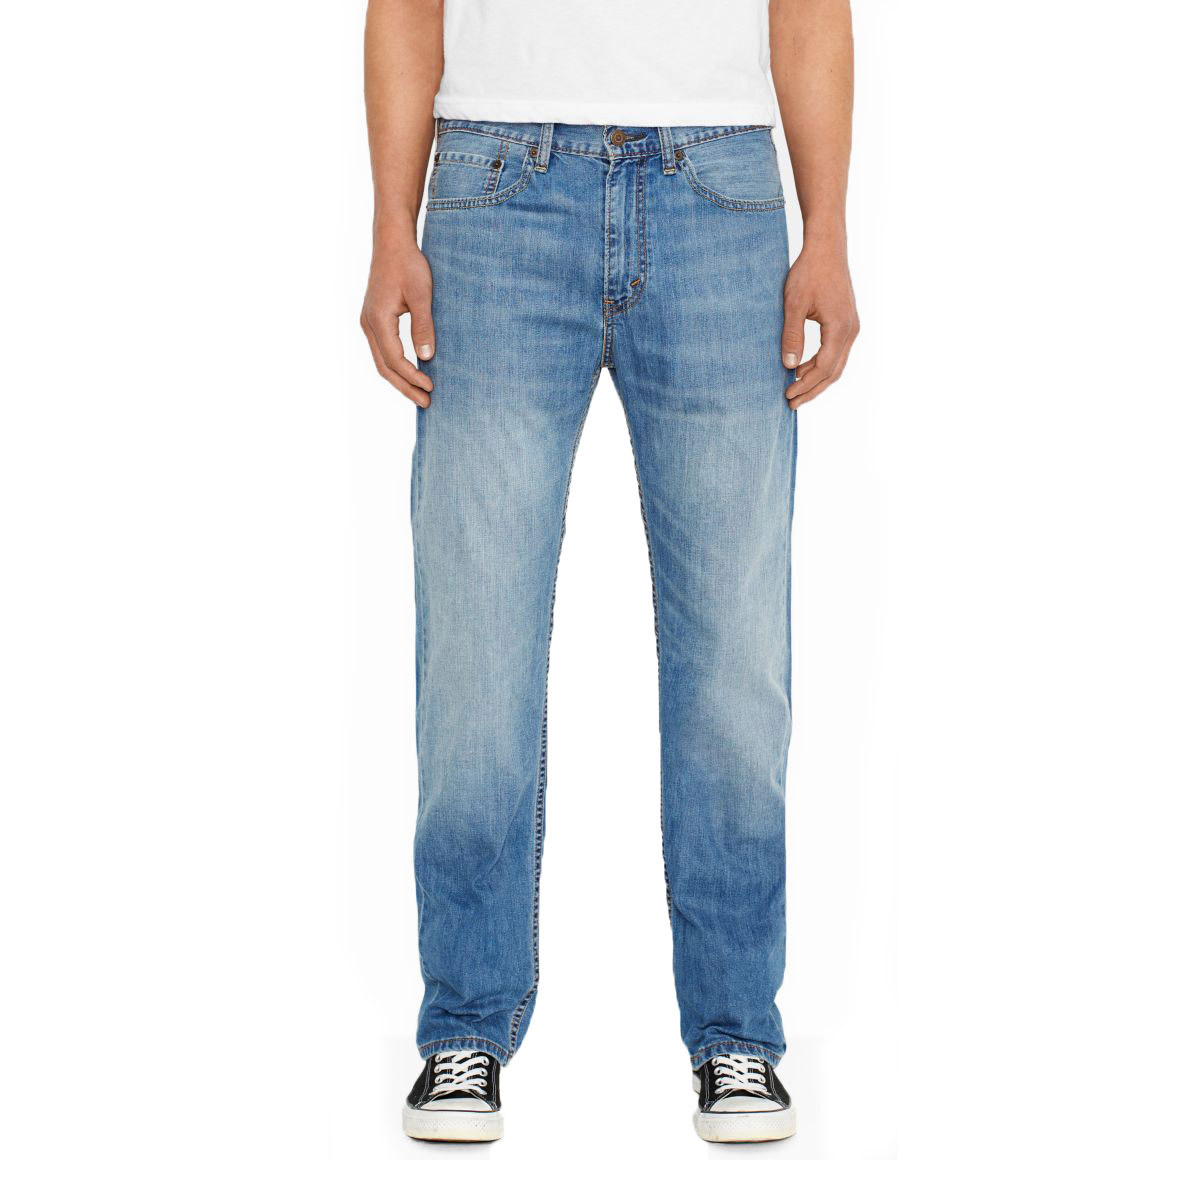 Levi's Men's 505 Regular Fit Jeans - Blue, 32/36